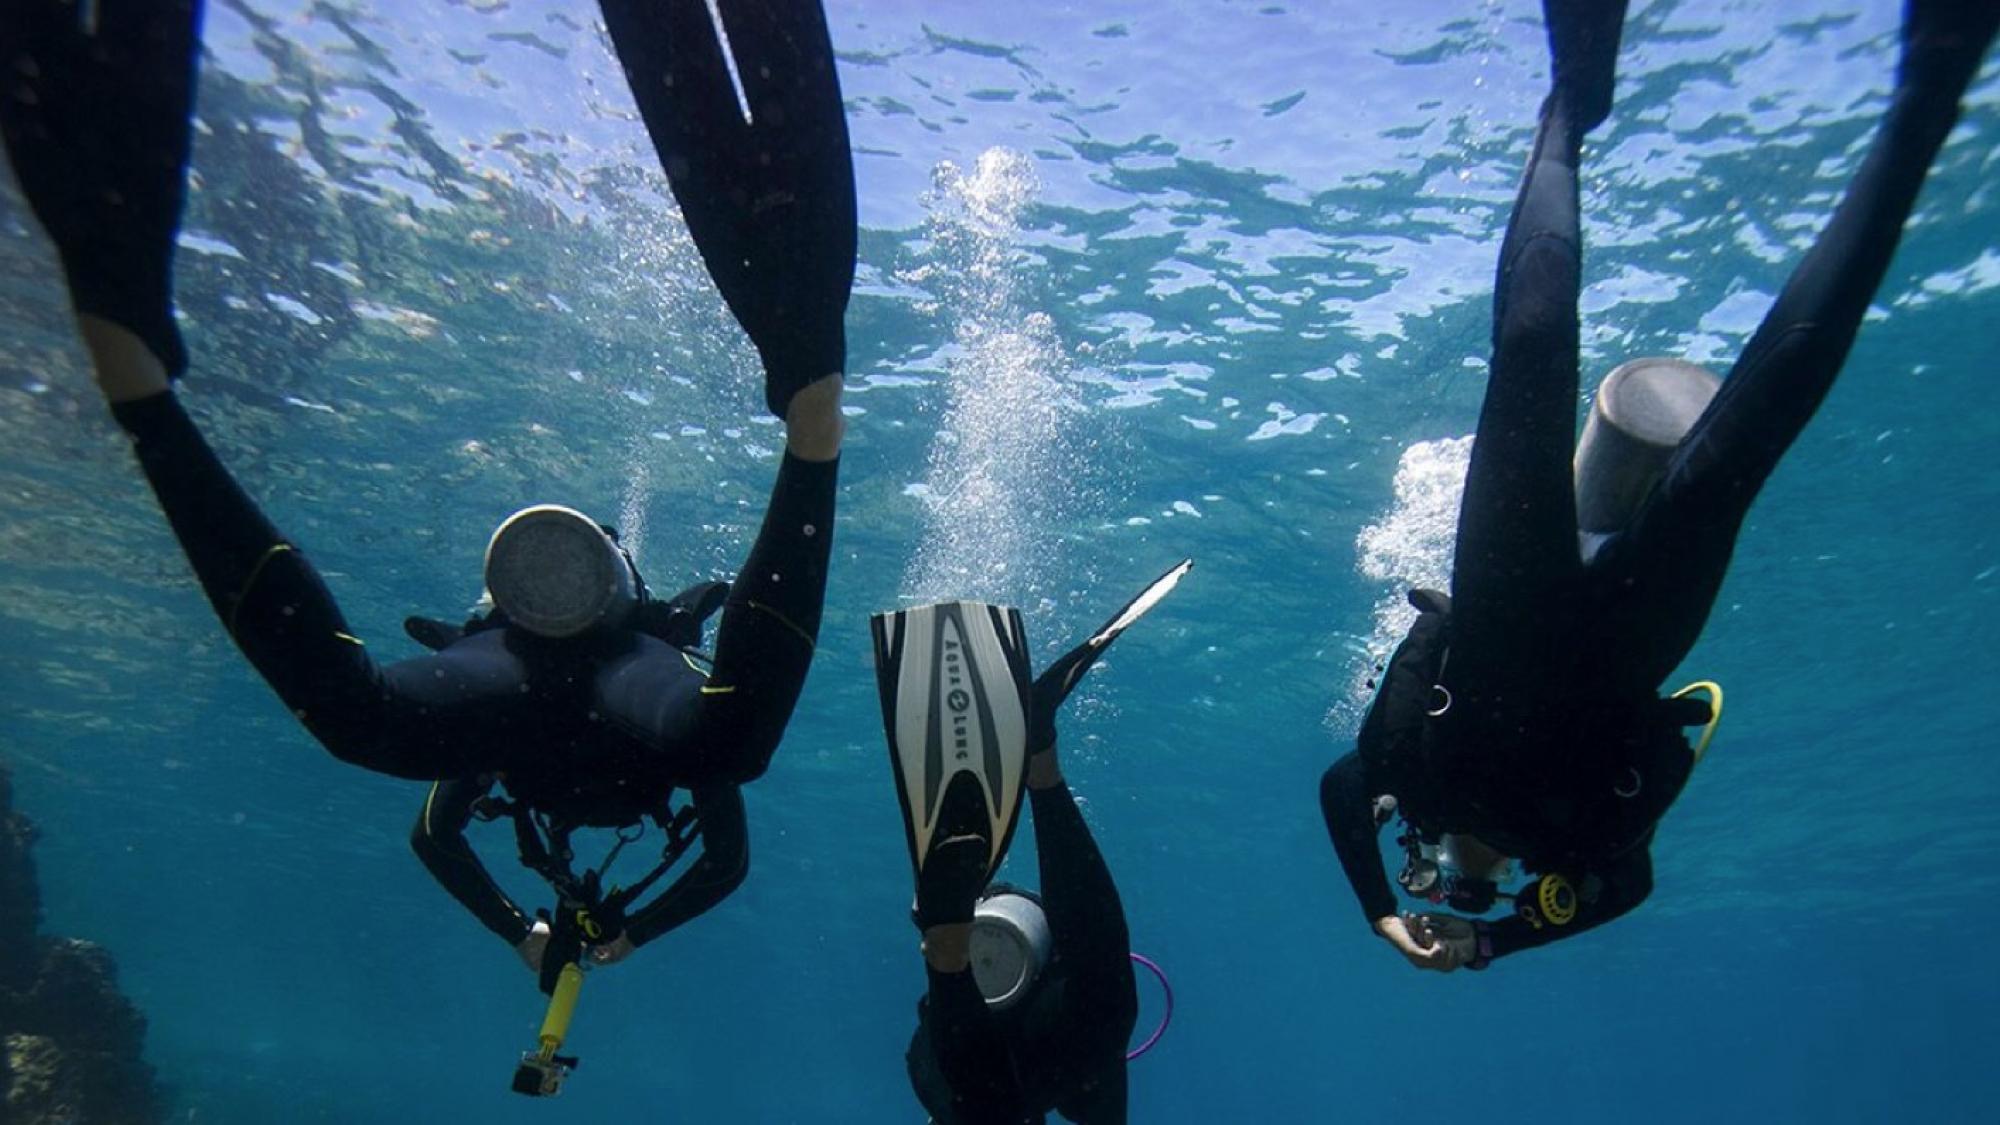 Details about   Keep Diving Open Heel Scuba Diving Long Fins Adjustable Snorkeling Swim Flippers 